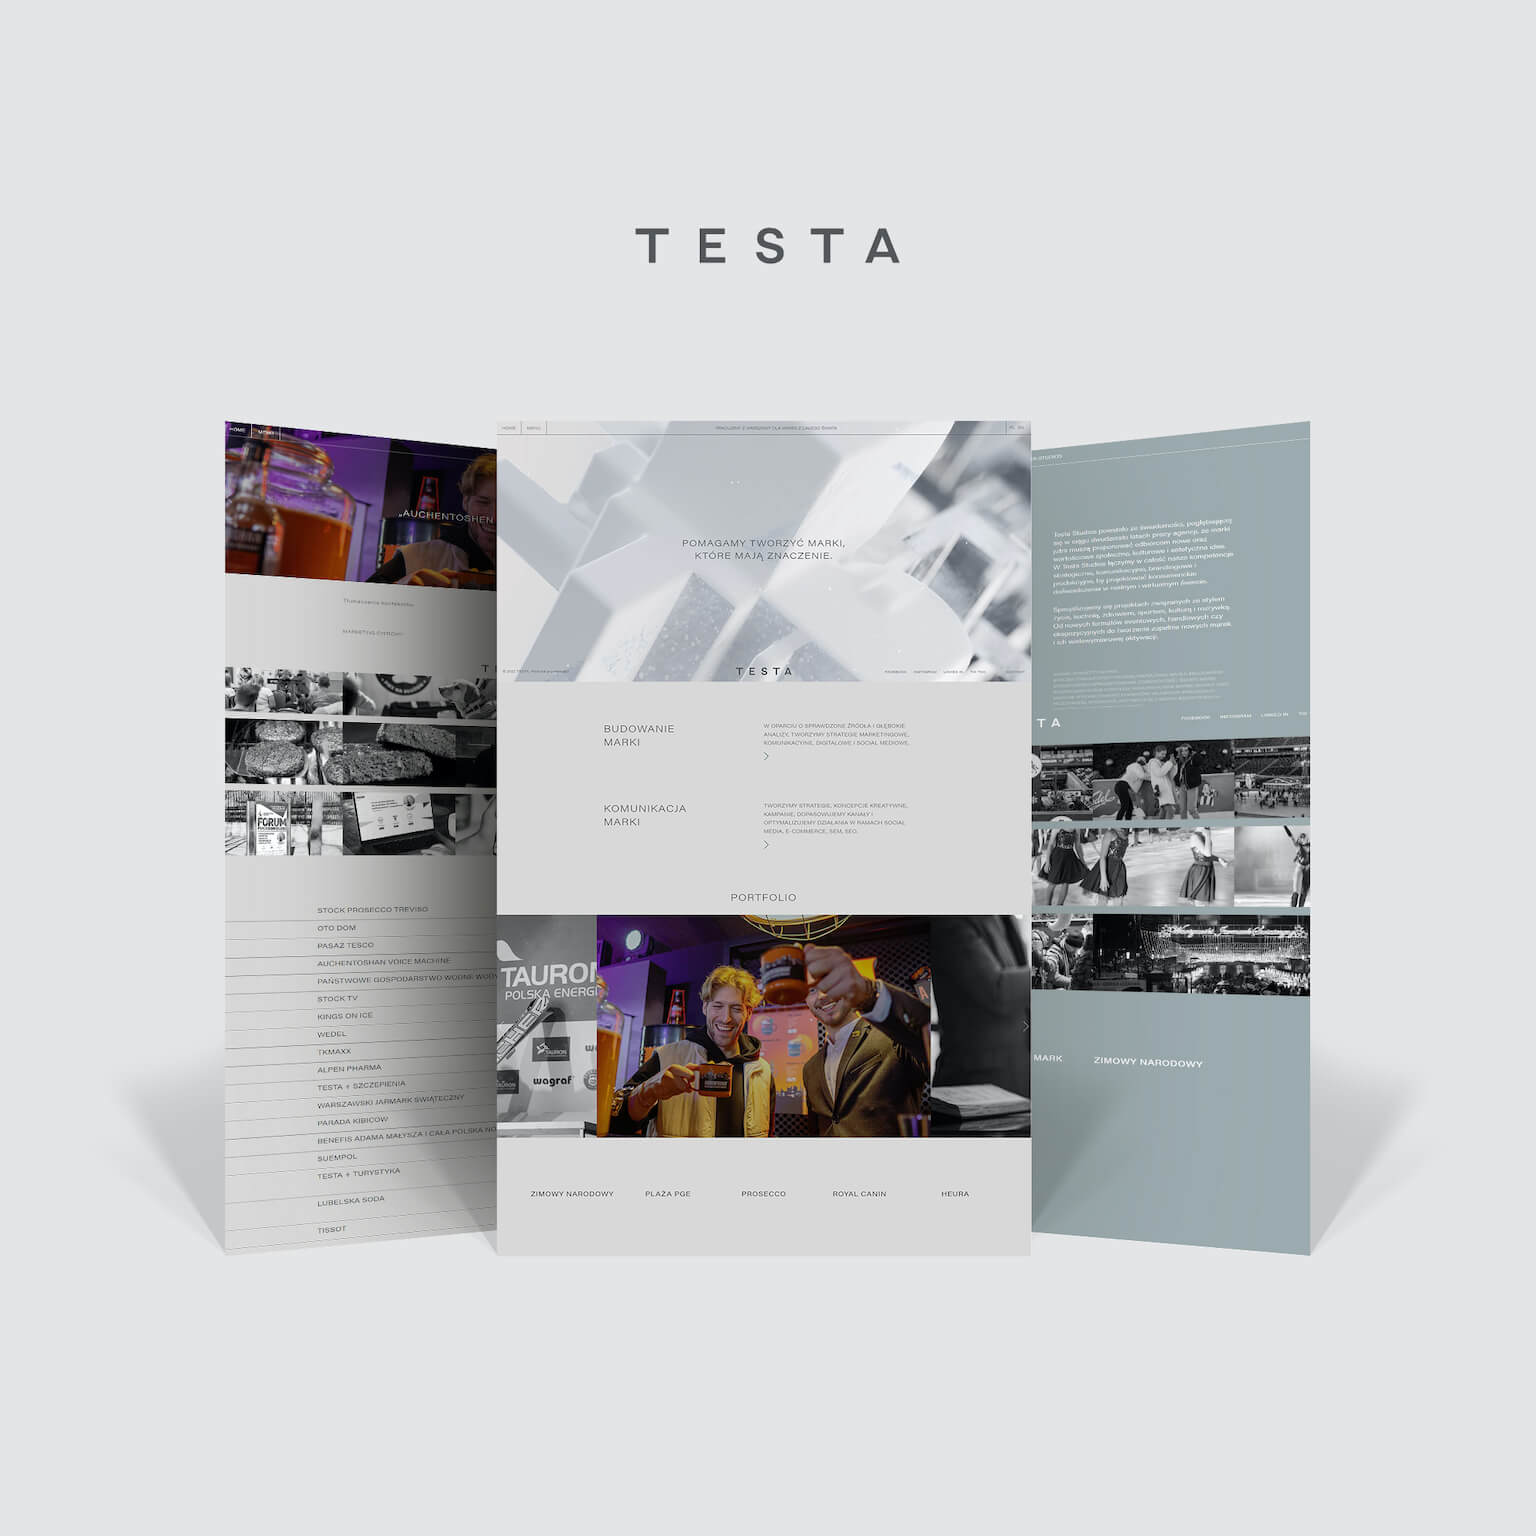 TESTA Communications - image